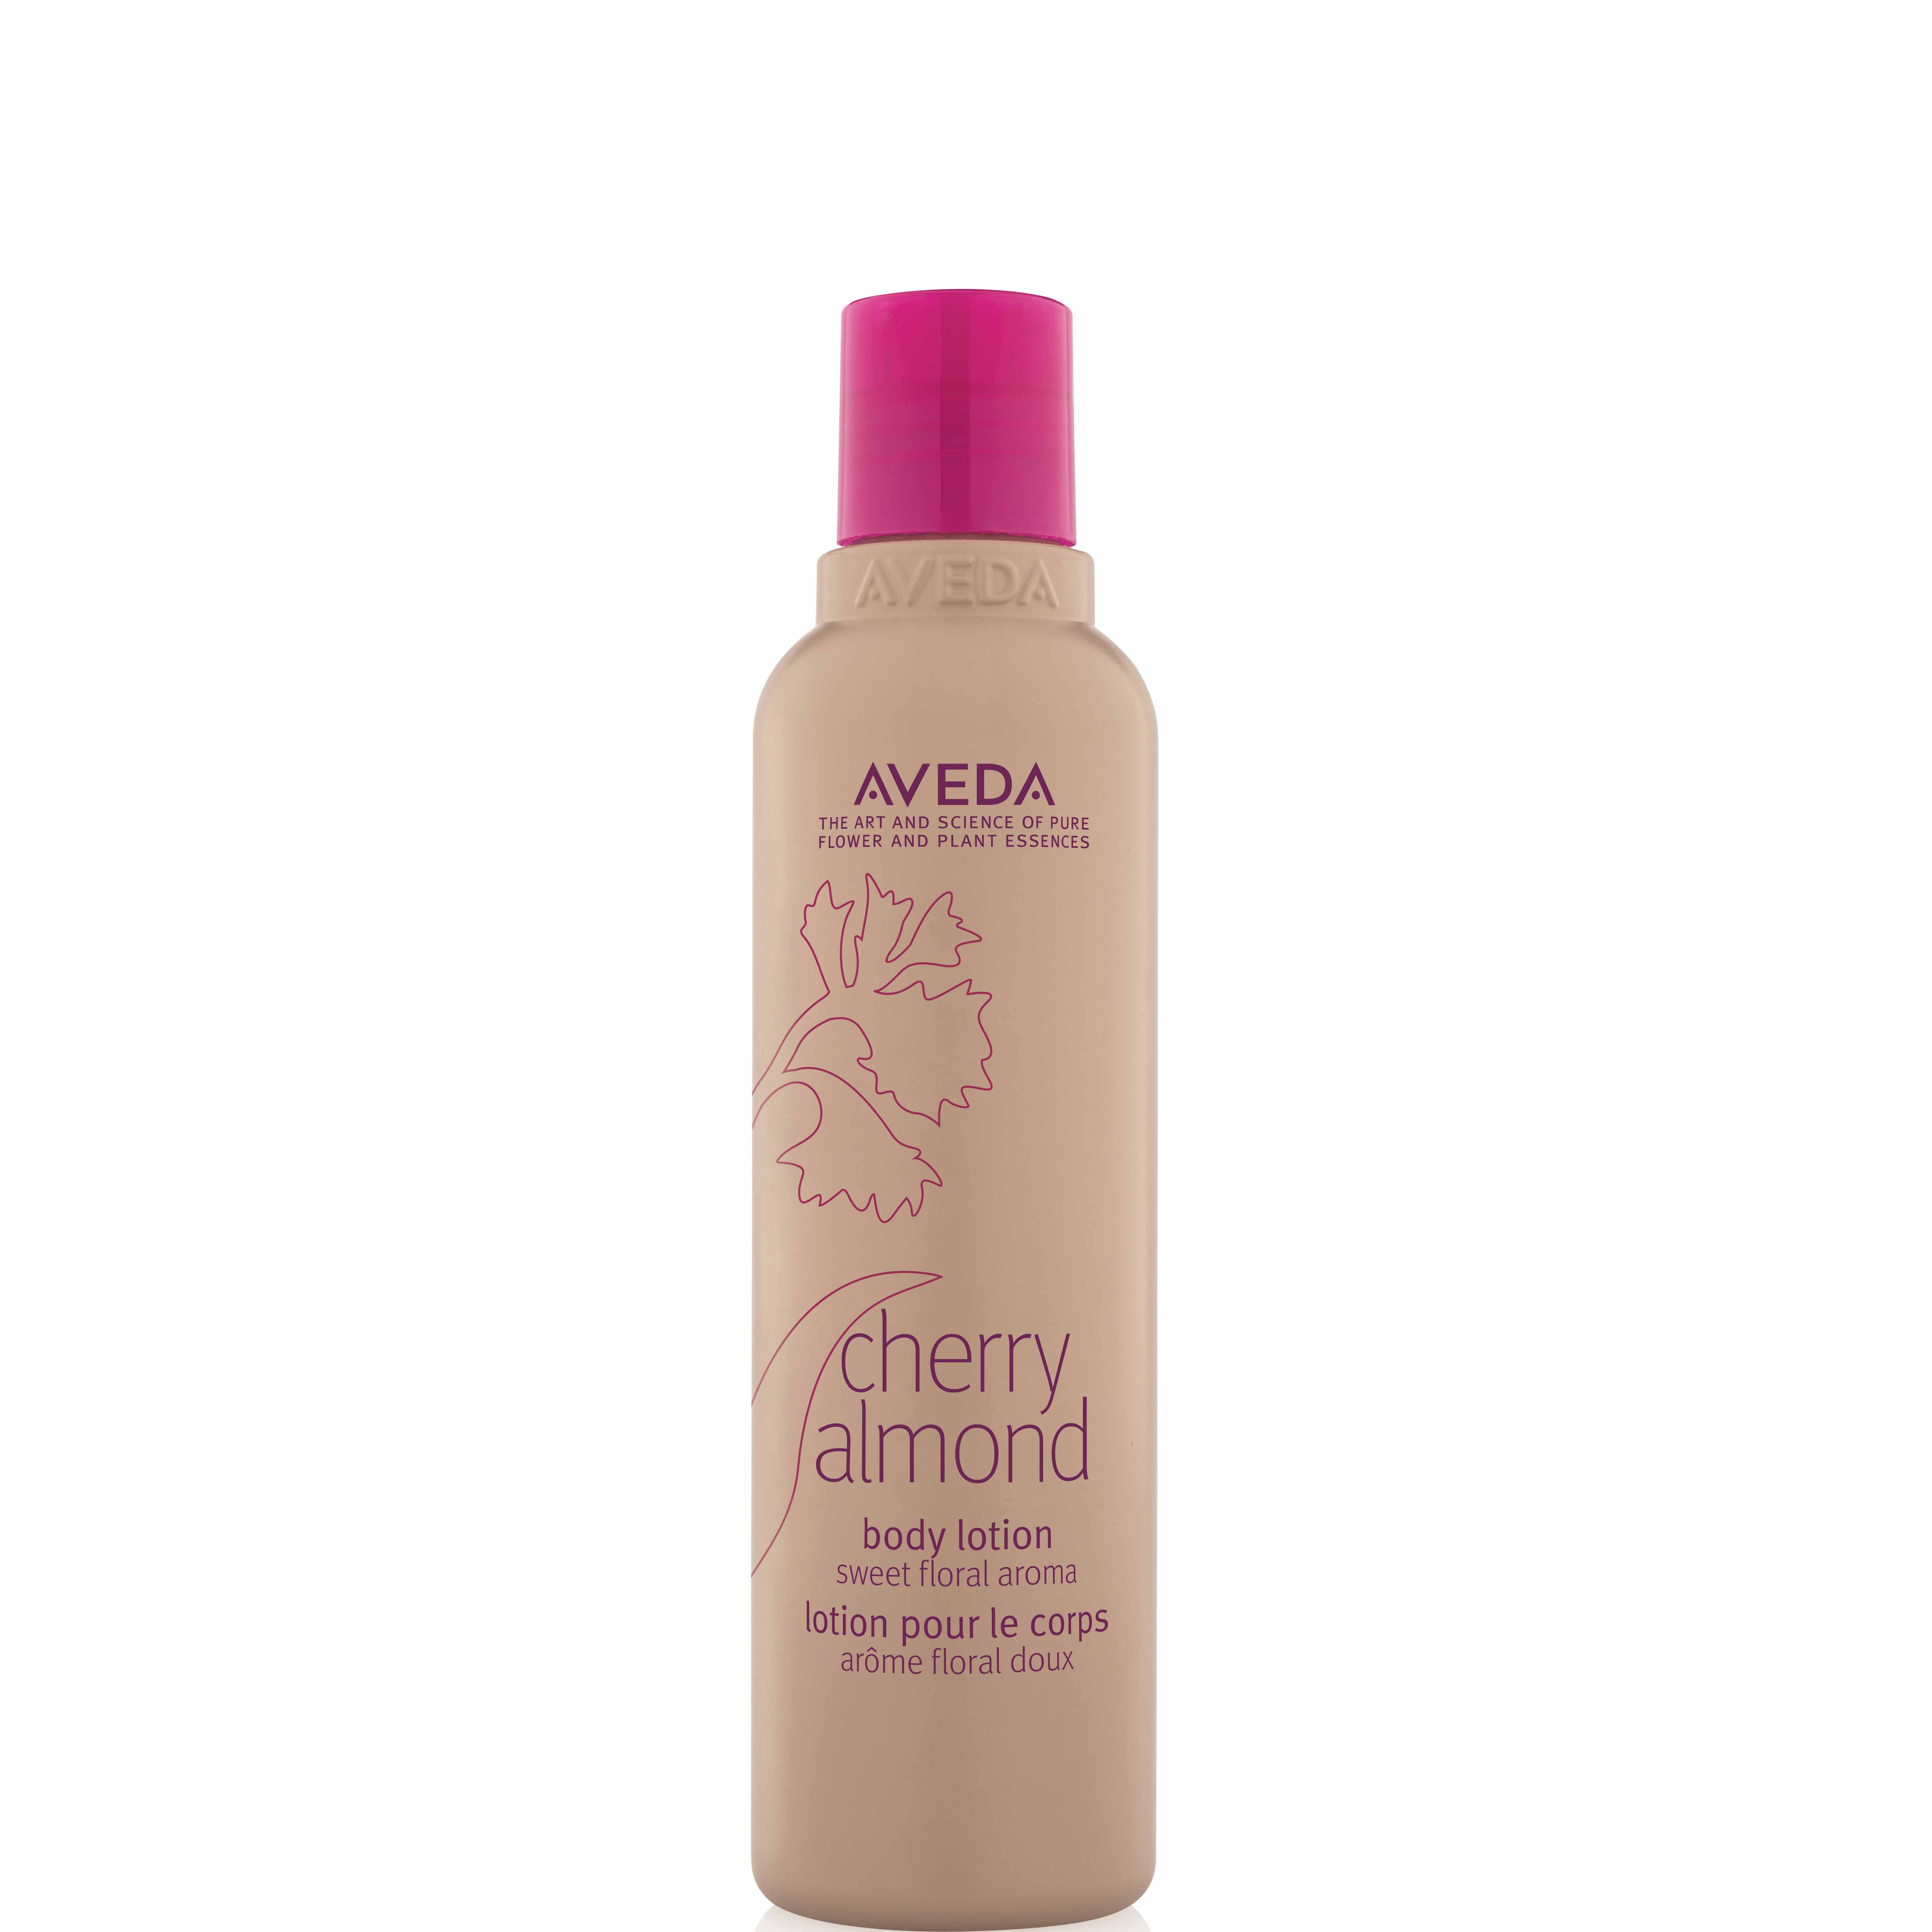 https://av-dashop.nl/wp-content/uploads/2020/11/Aveda-cherry-almond-hand-and-body-lotion-200ml-1.jpg